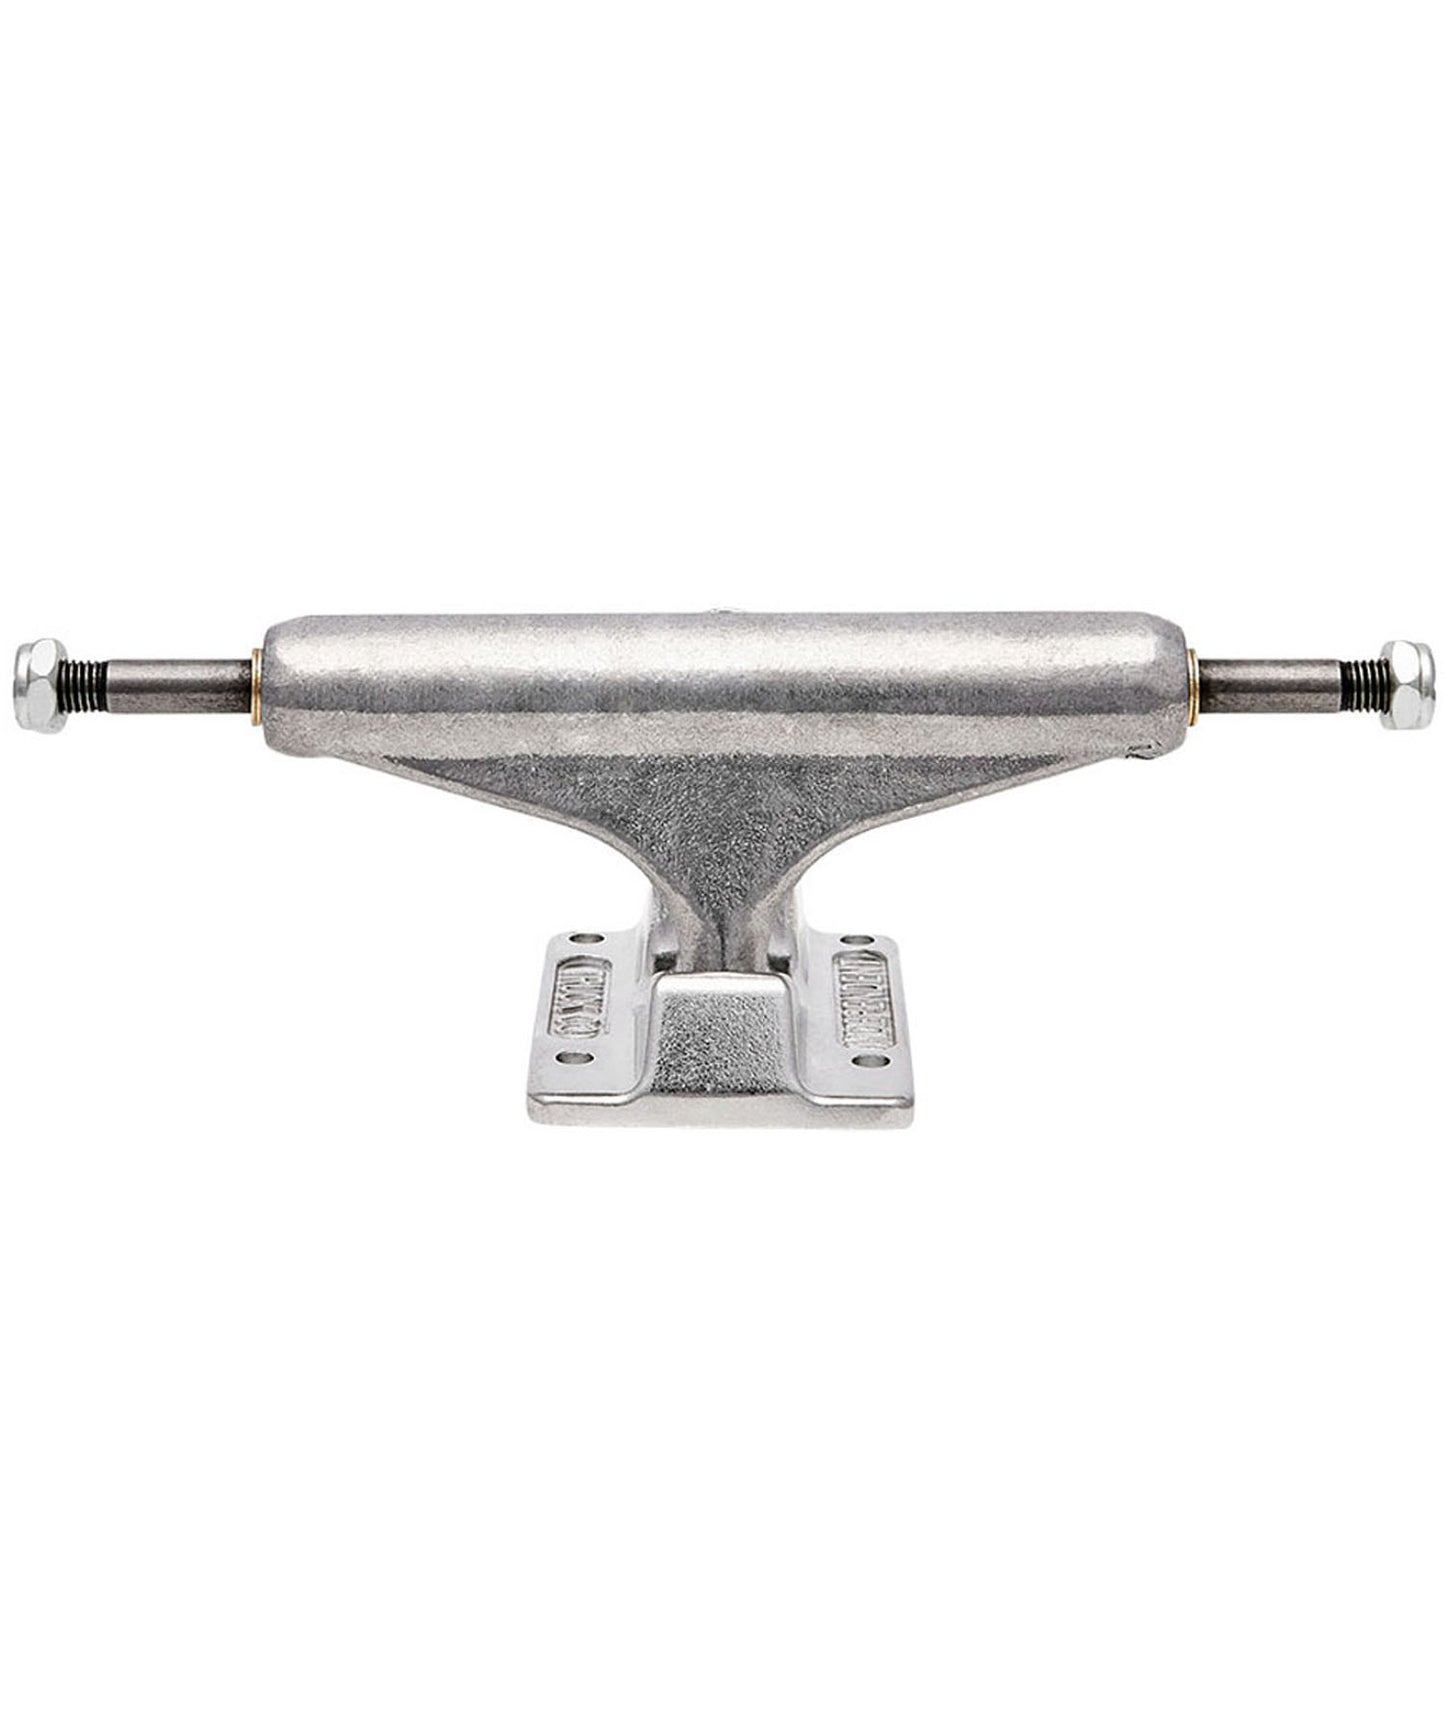 independent-Hollow-Silver-standard-169mm-ejes de calidad-para skate-hanger y placa base de aluminio-duraderos-independent-marca reputada en ejes.